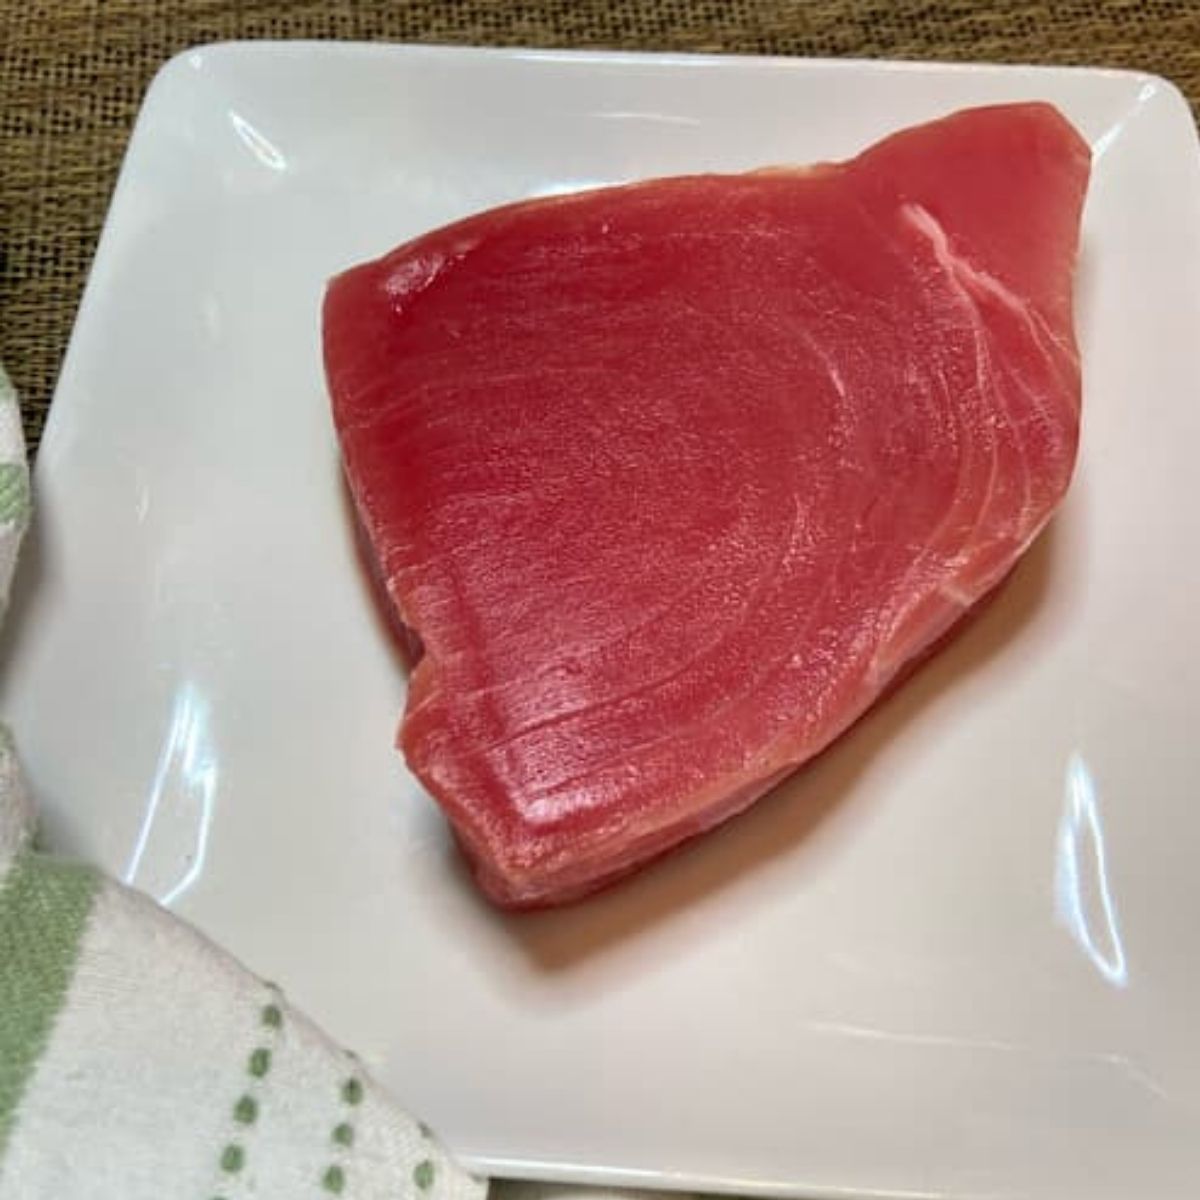 yellowfin tuna fillet on plate